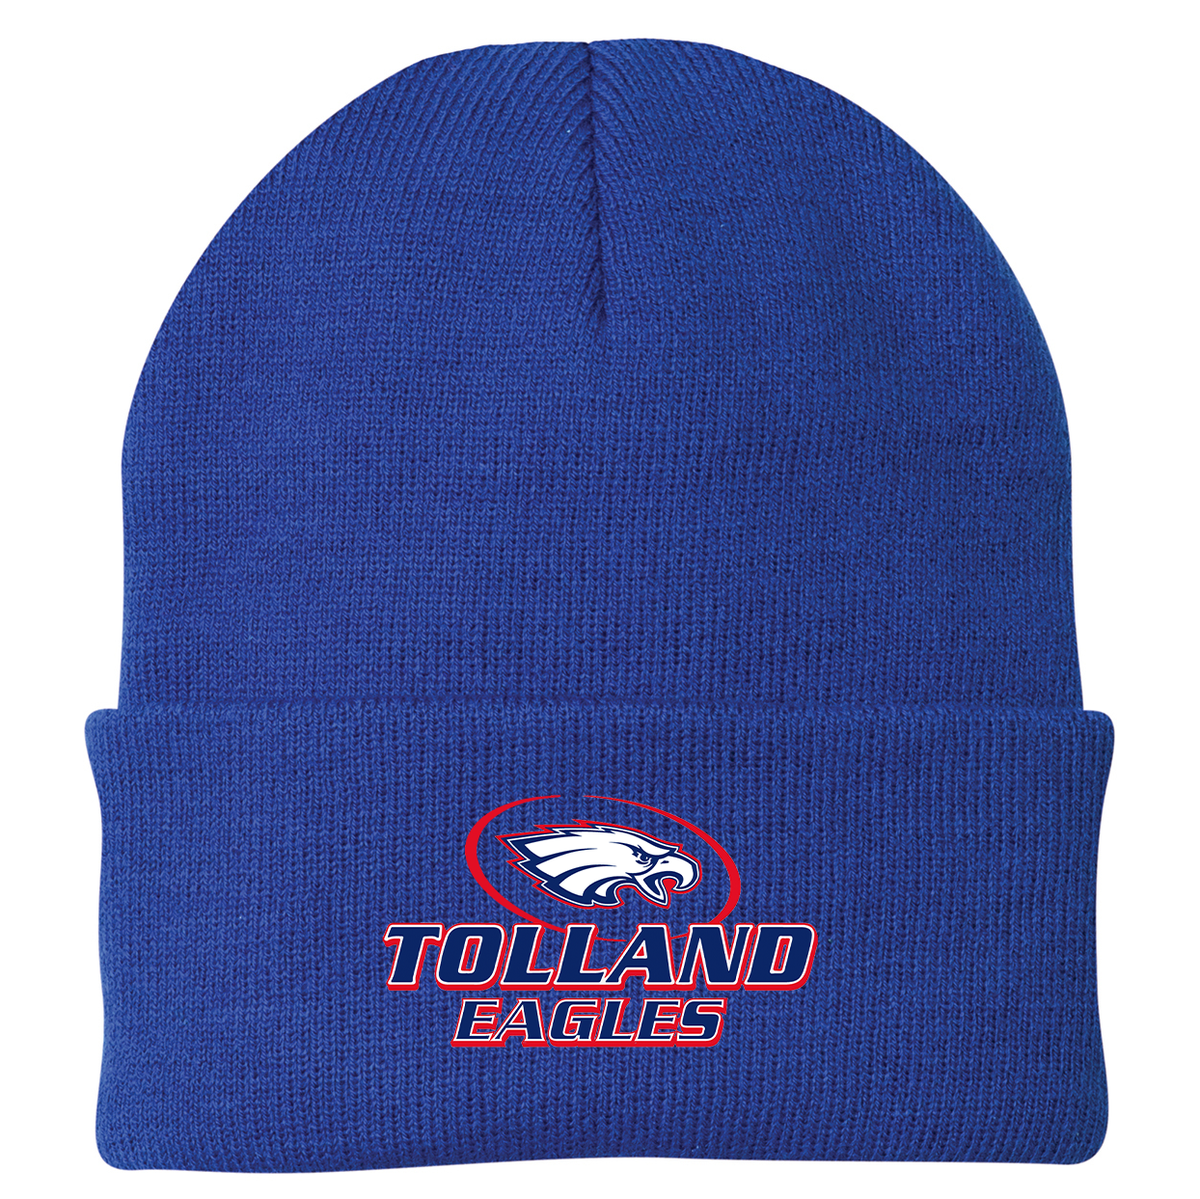 Tolland Football Knit Beanie